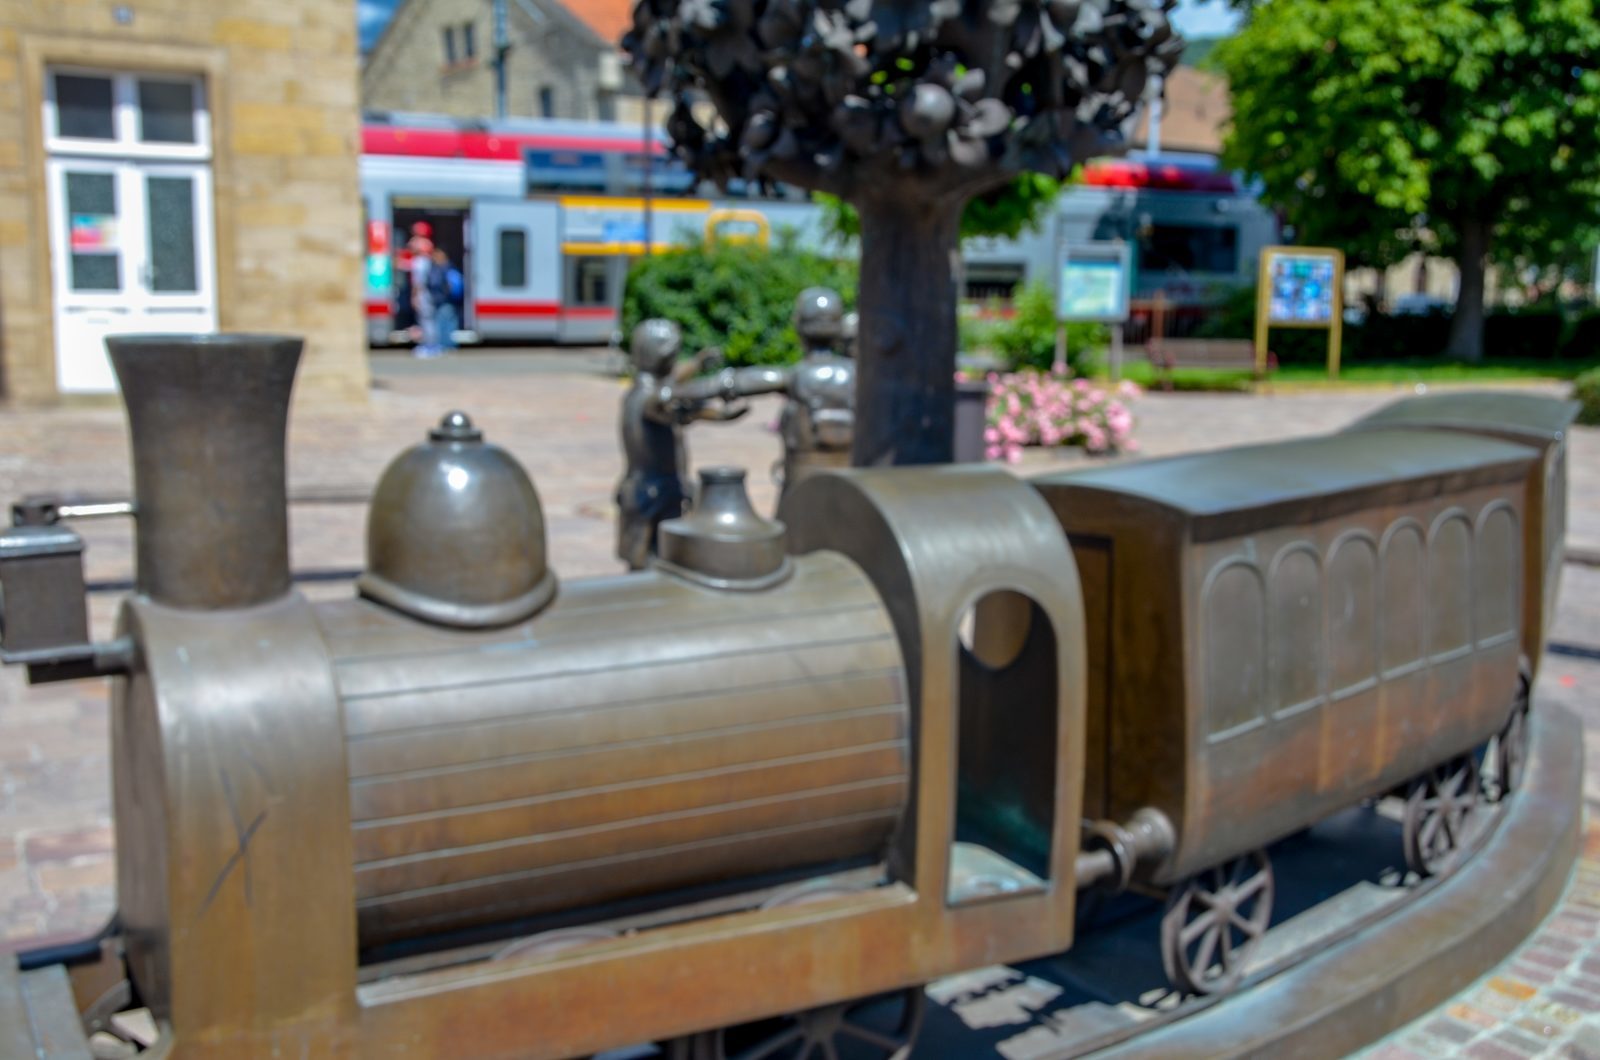 Diekirch train station